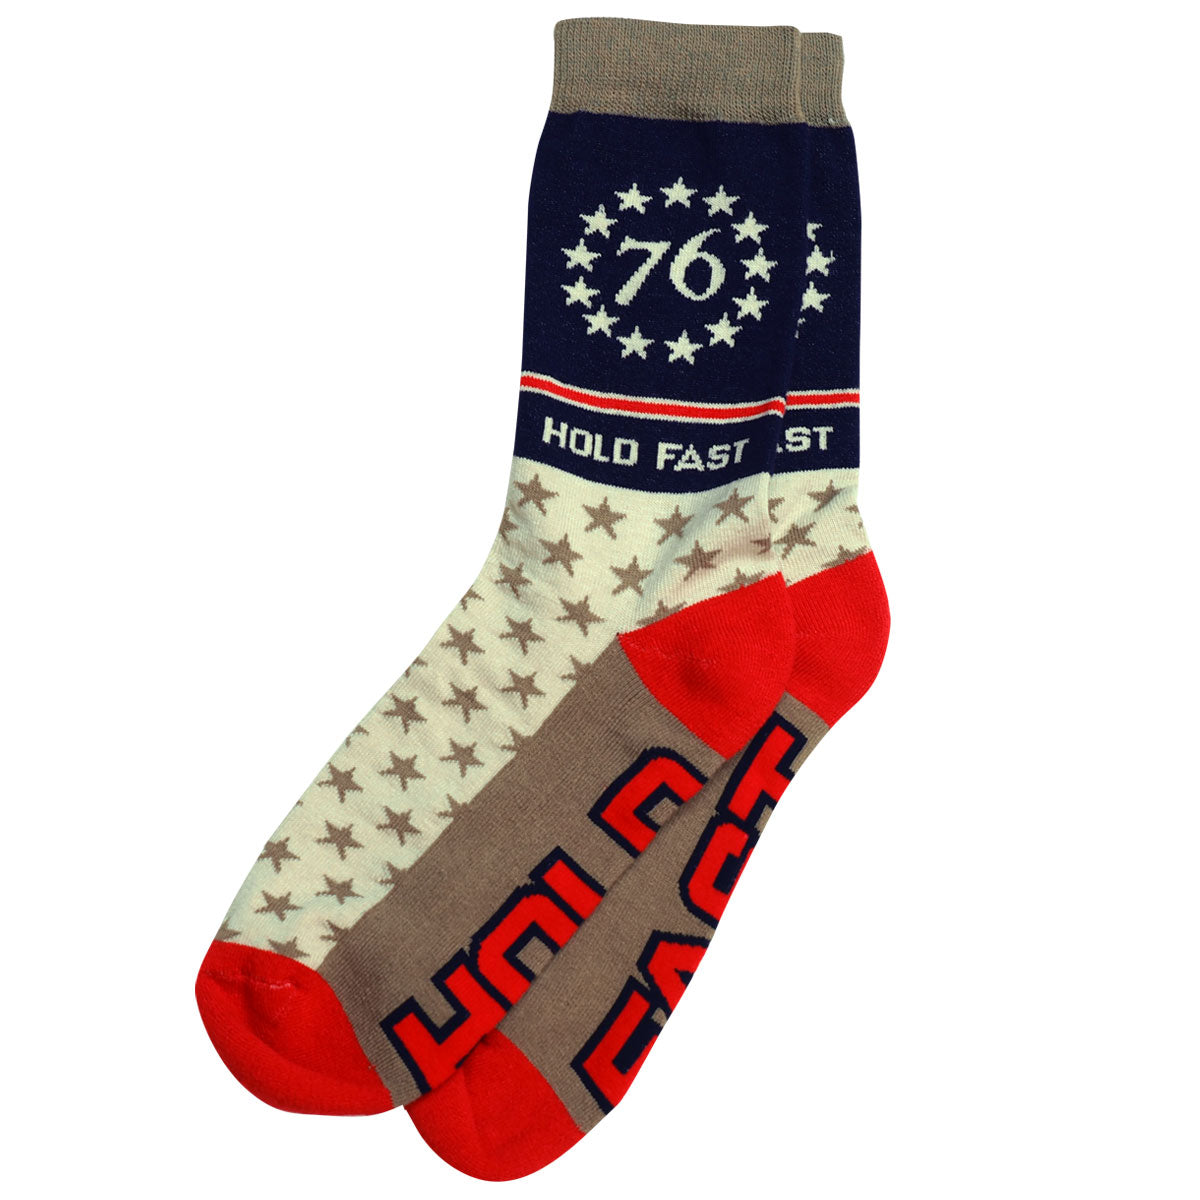 1776 Socks